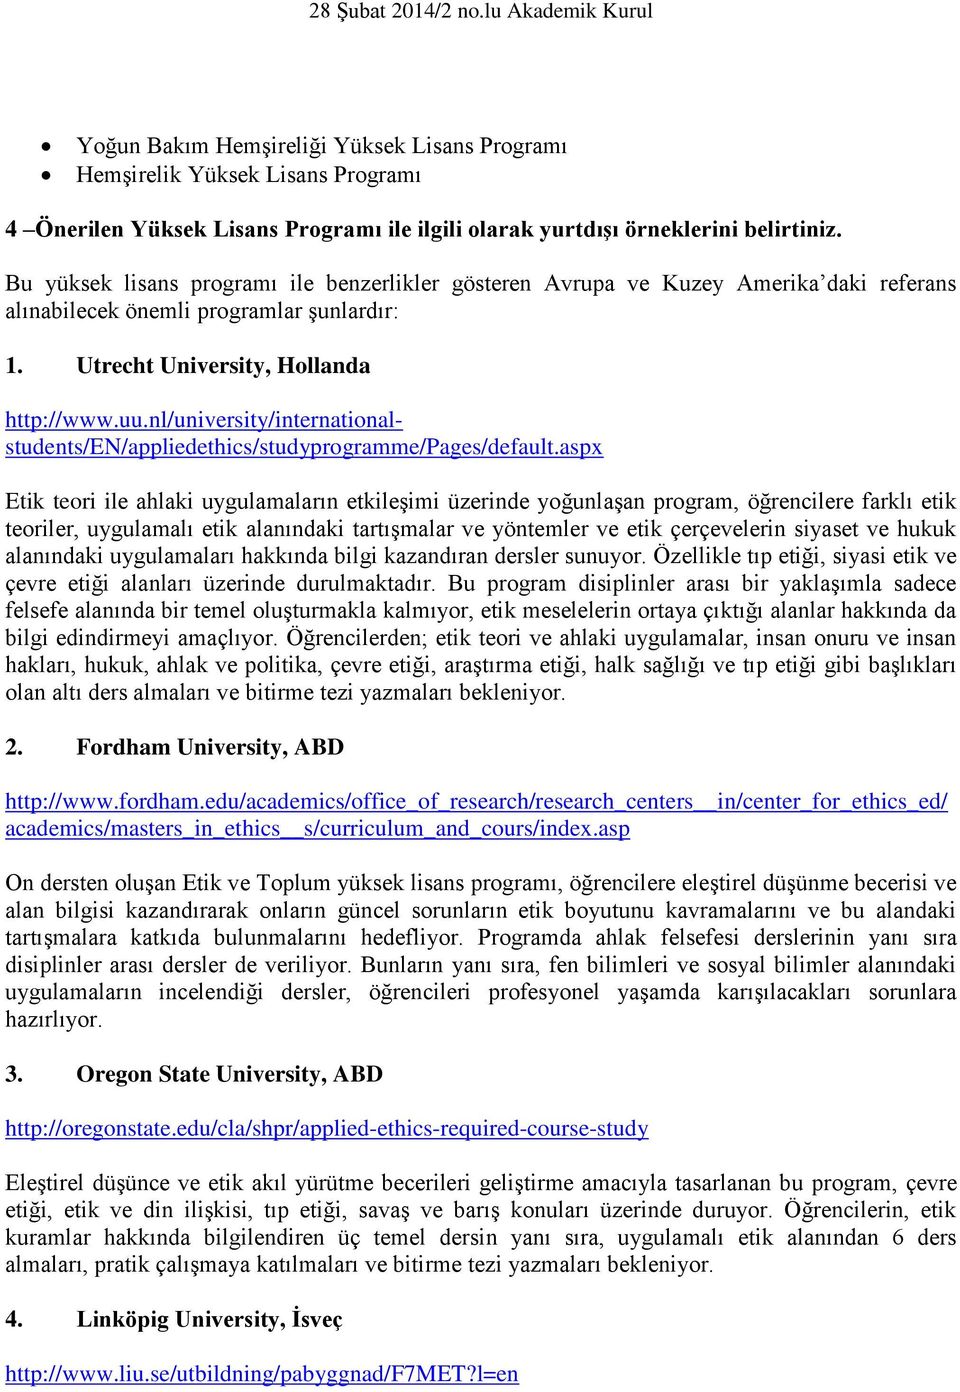 nl/university/internationalstudents/en/appliedethics/studyprogramme/pages/default.